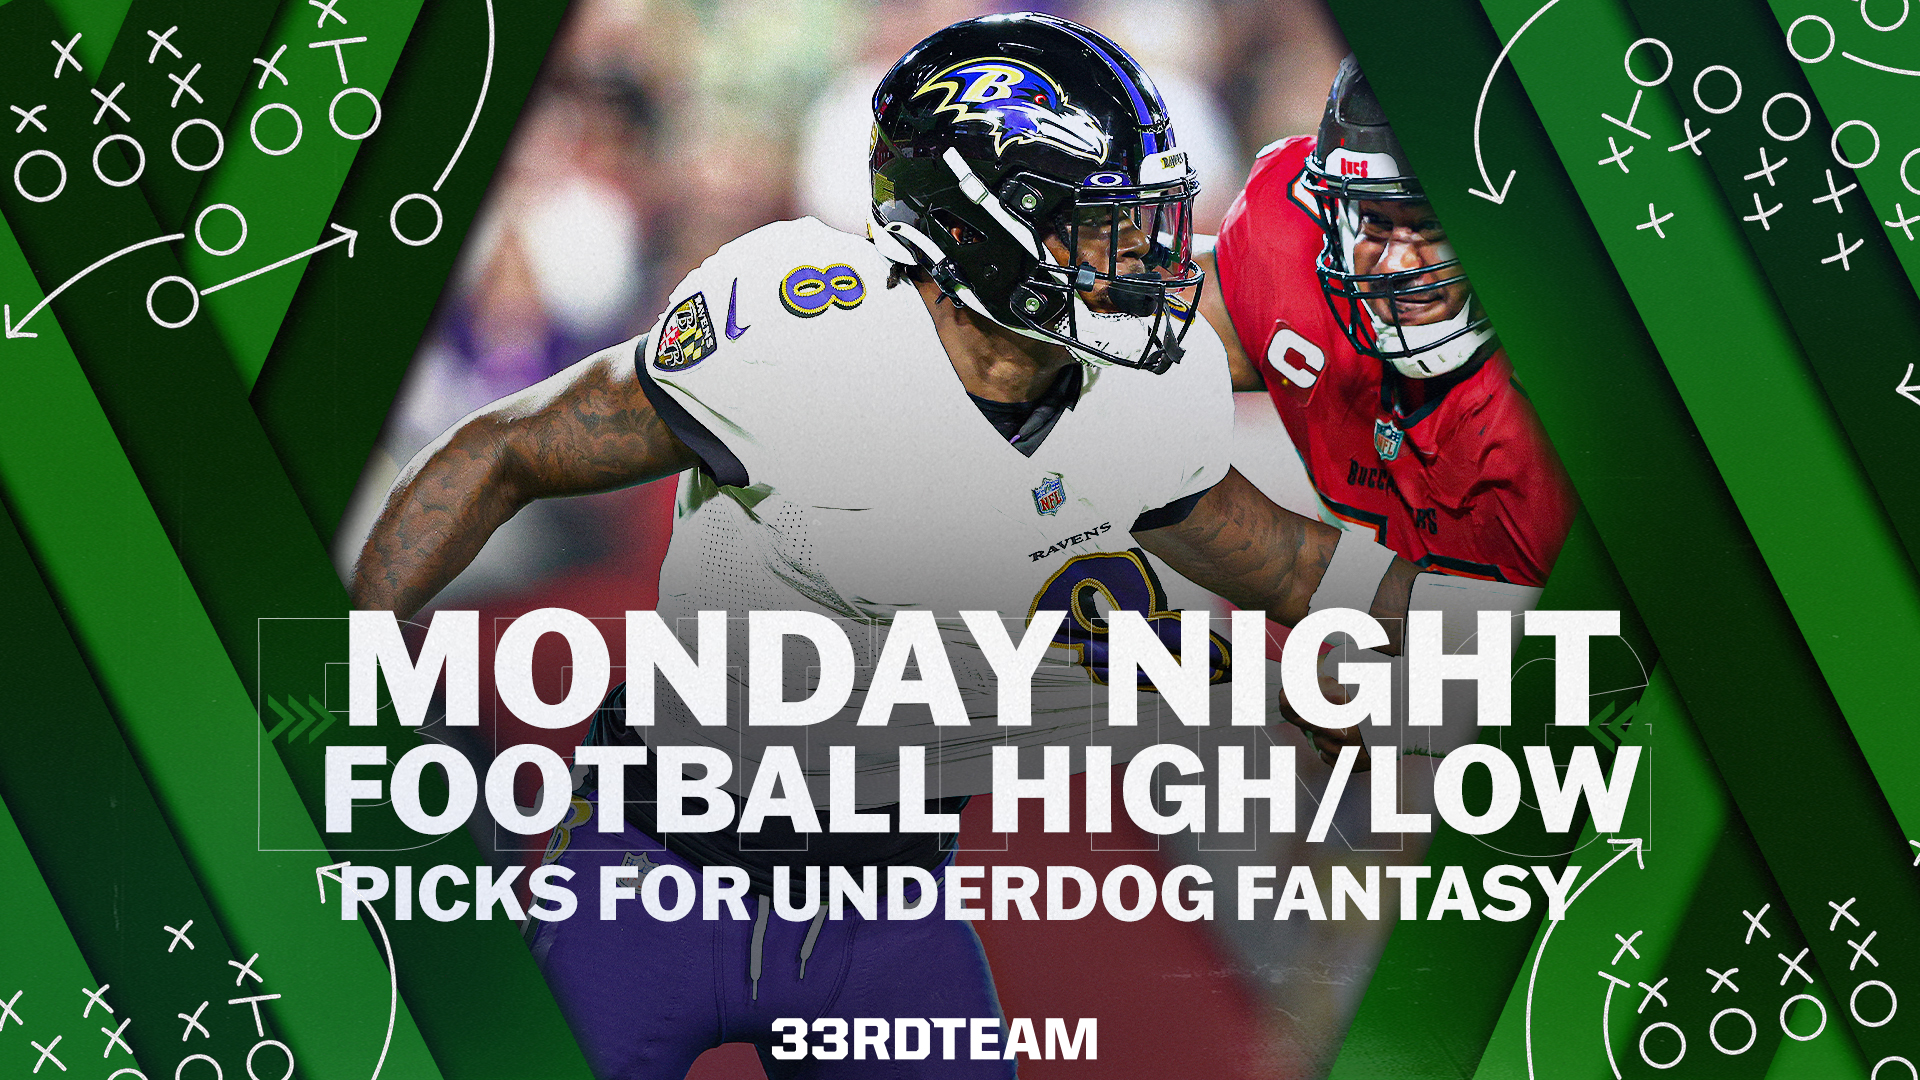 Monday Night Football High/Low Picks for Underdog Fantasy